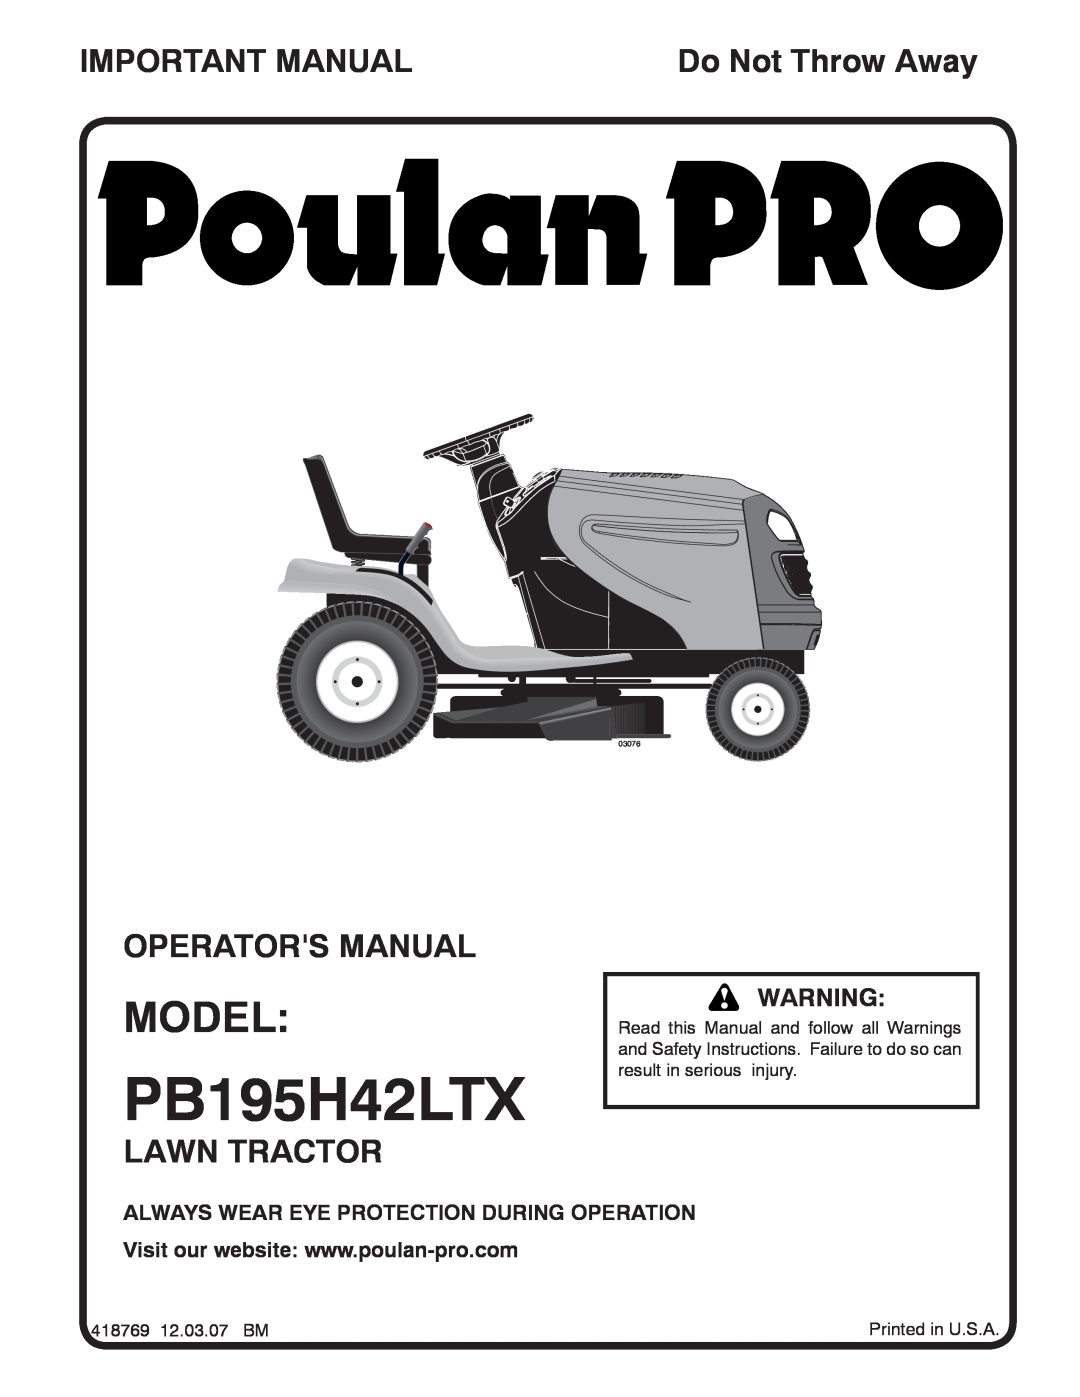 Poulan 418769 manual Model, Important Manual, Operators Manual, Lawn Tractor, Do Not Throw Away, PB195H42LTX, 03076 